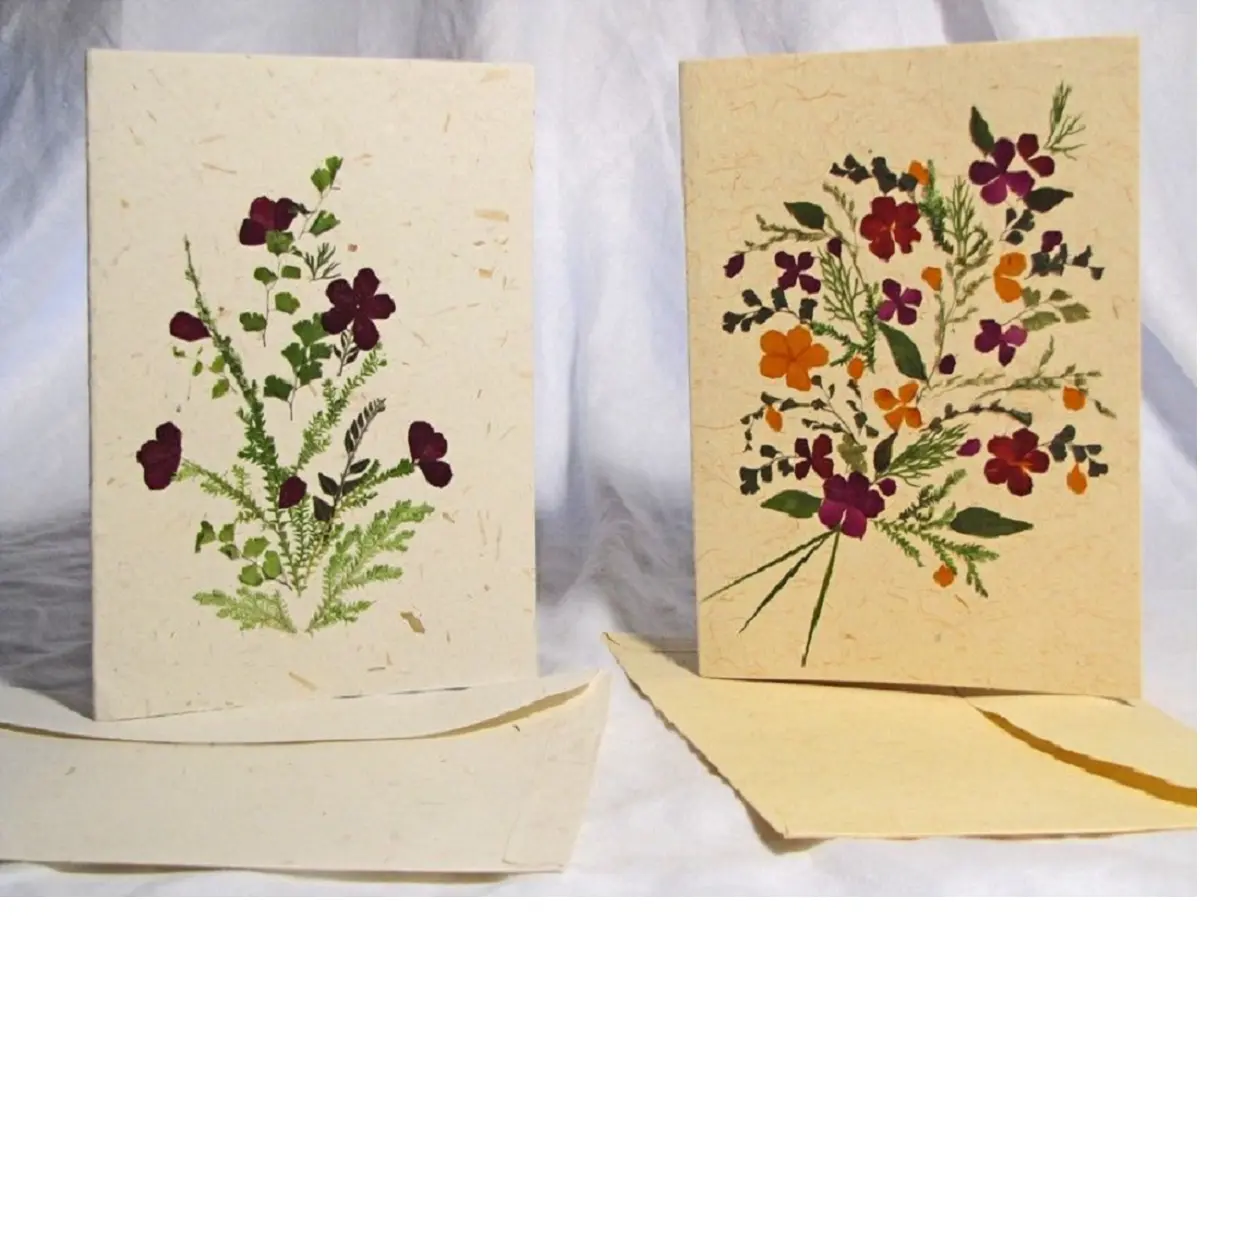 Tarjeta de felicitación de flores secas, hecha a mano